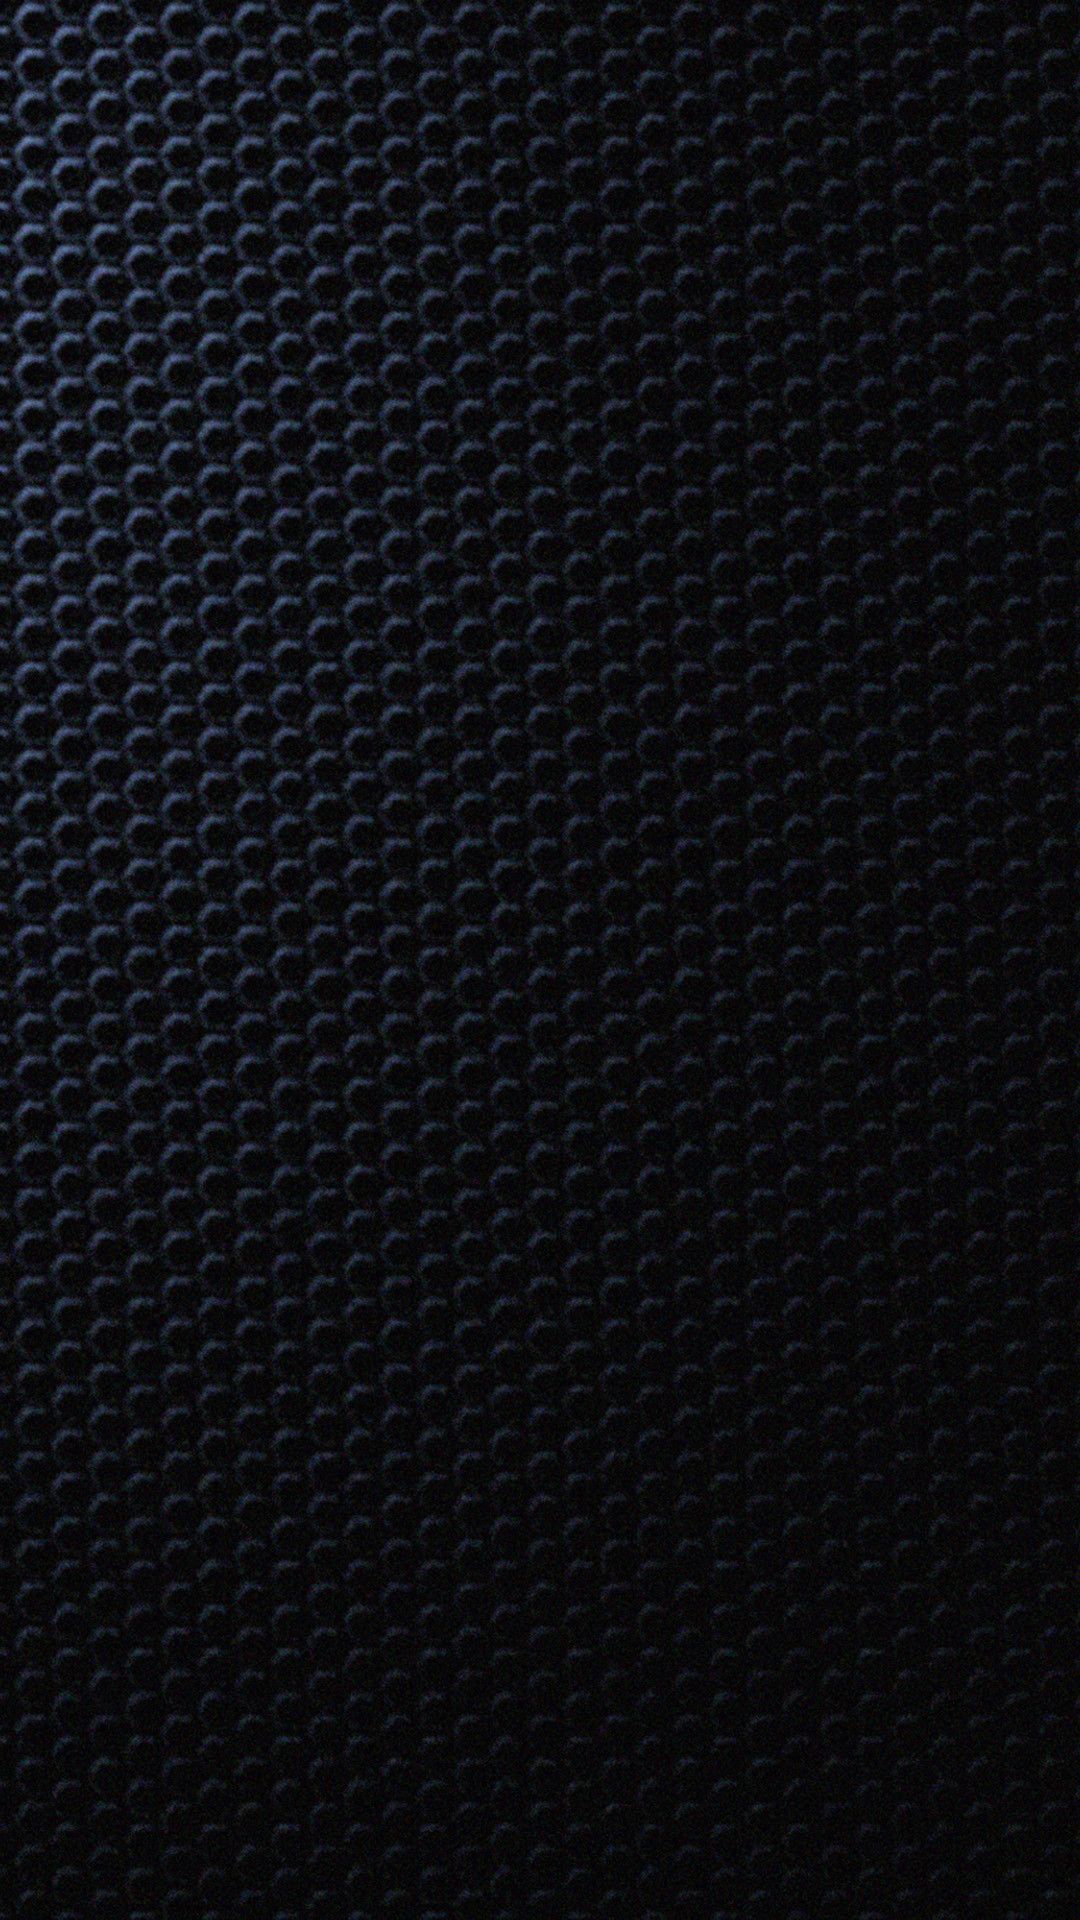 Samsung Galaxy Black Wallpapers on WallpaperDog